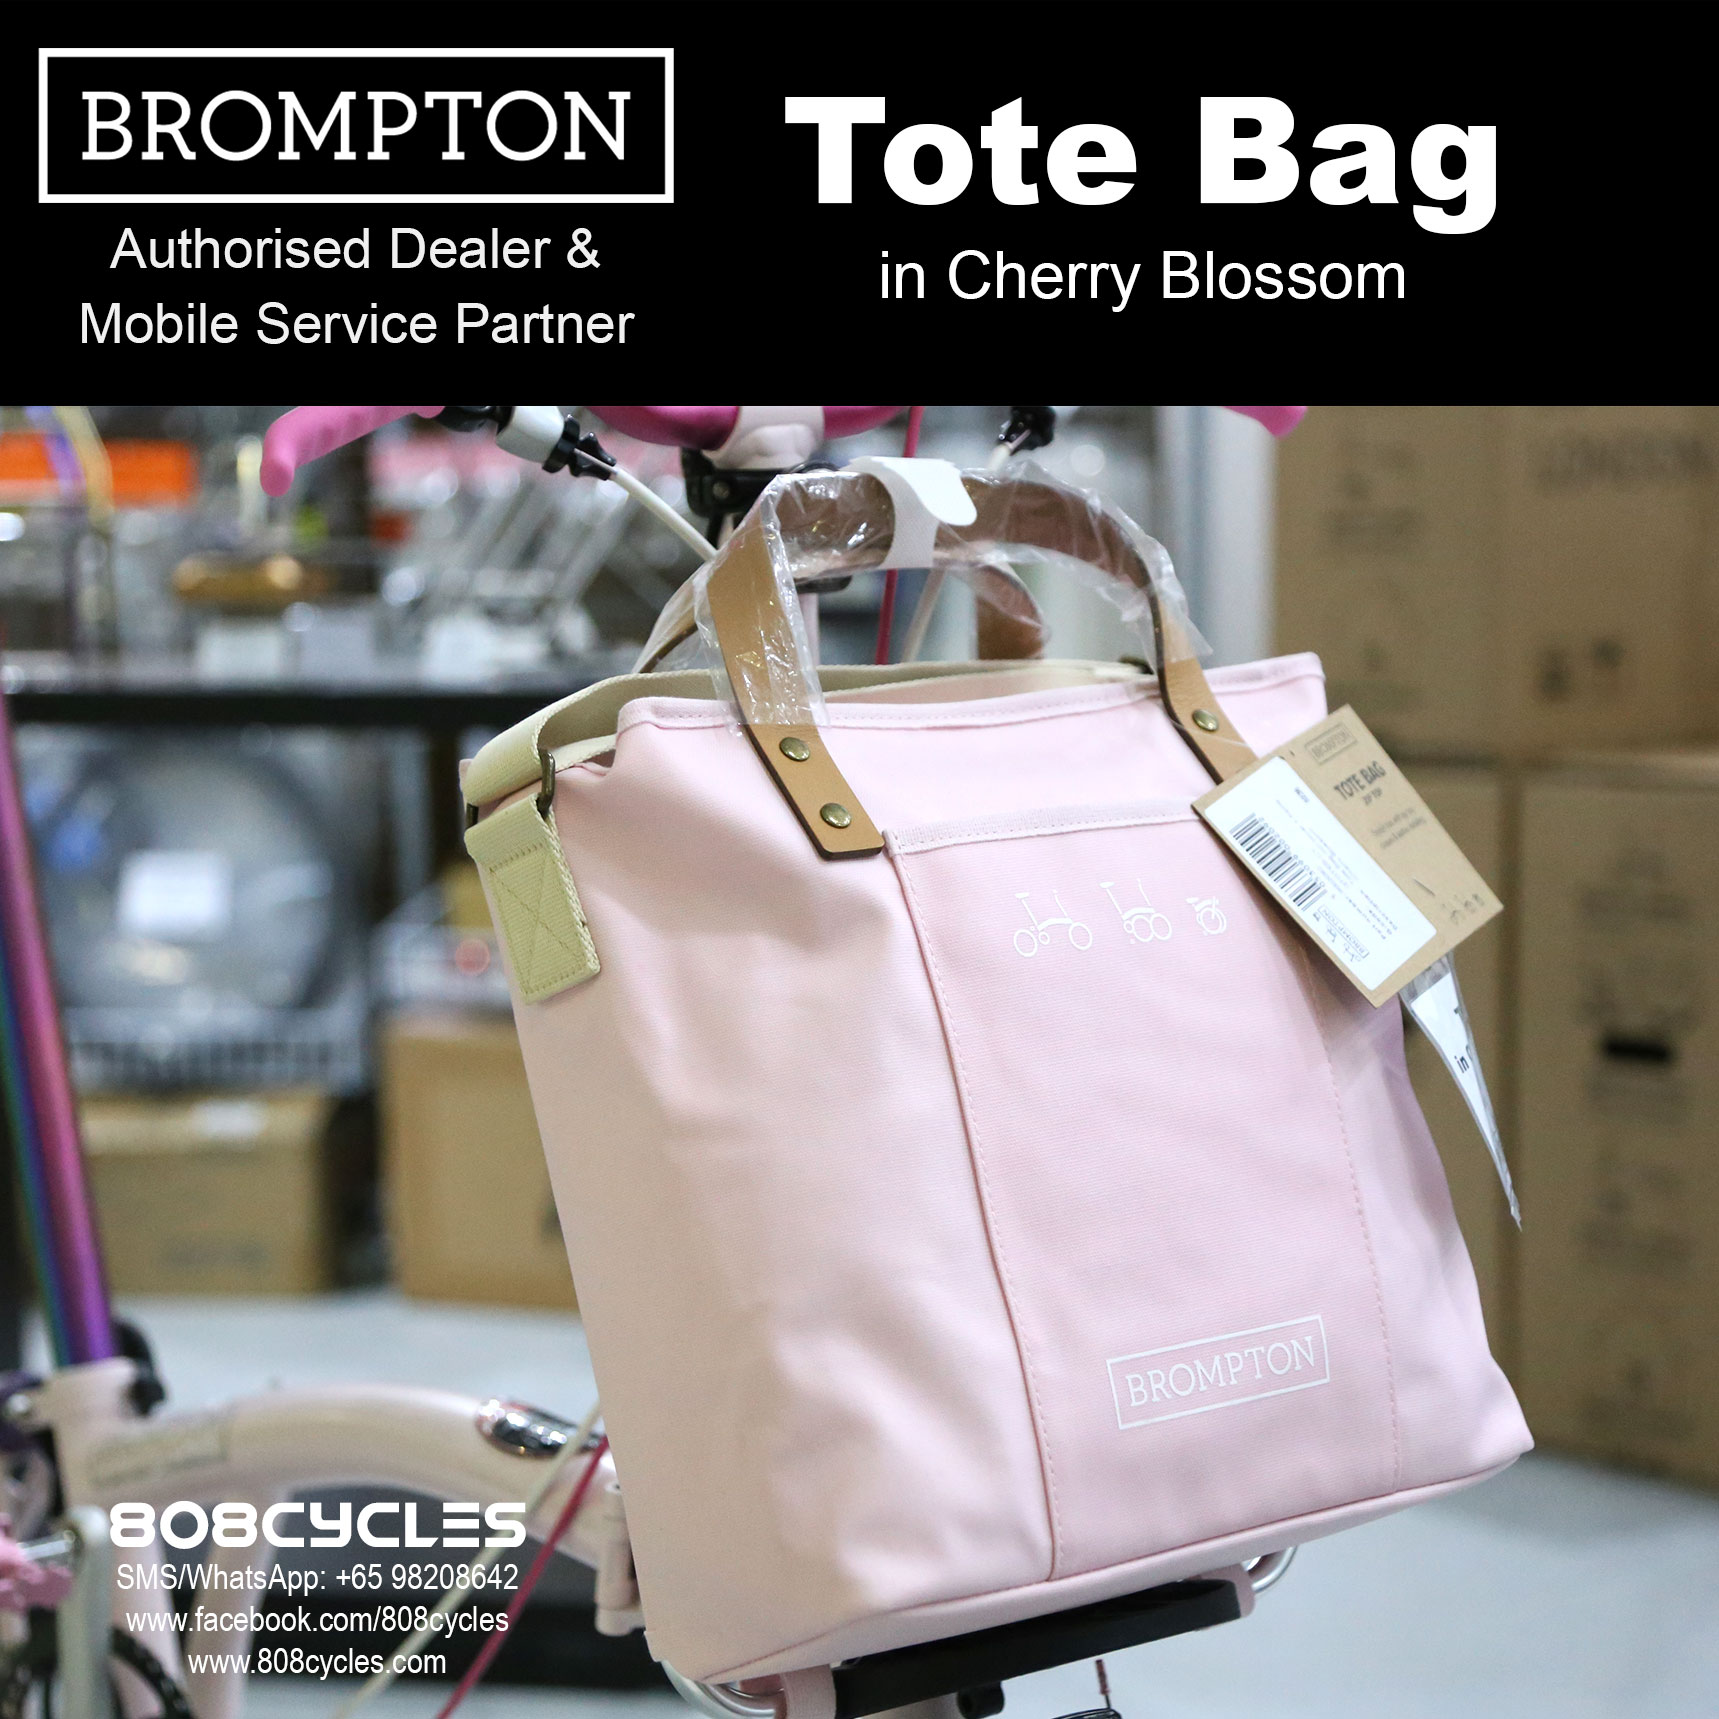 brompton tote bag cherry blossom